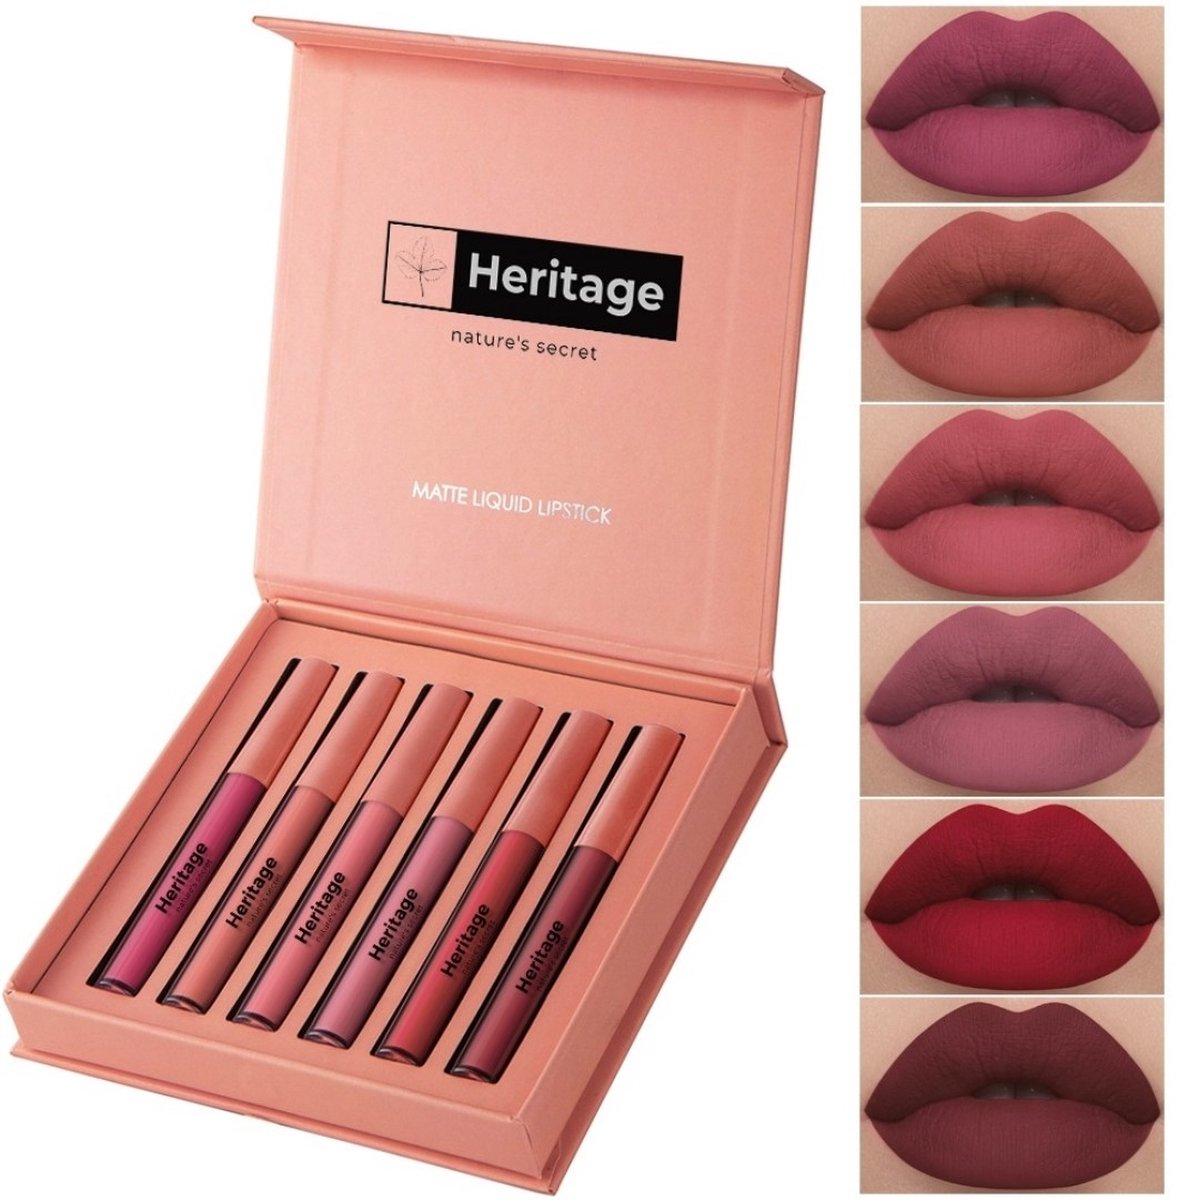 HERITAGE 6 kleuren Long lasting Matte Liquid Lipsticks Set - Vegan - Waterproof - non sticky - High pigmented - Kissproof.